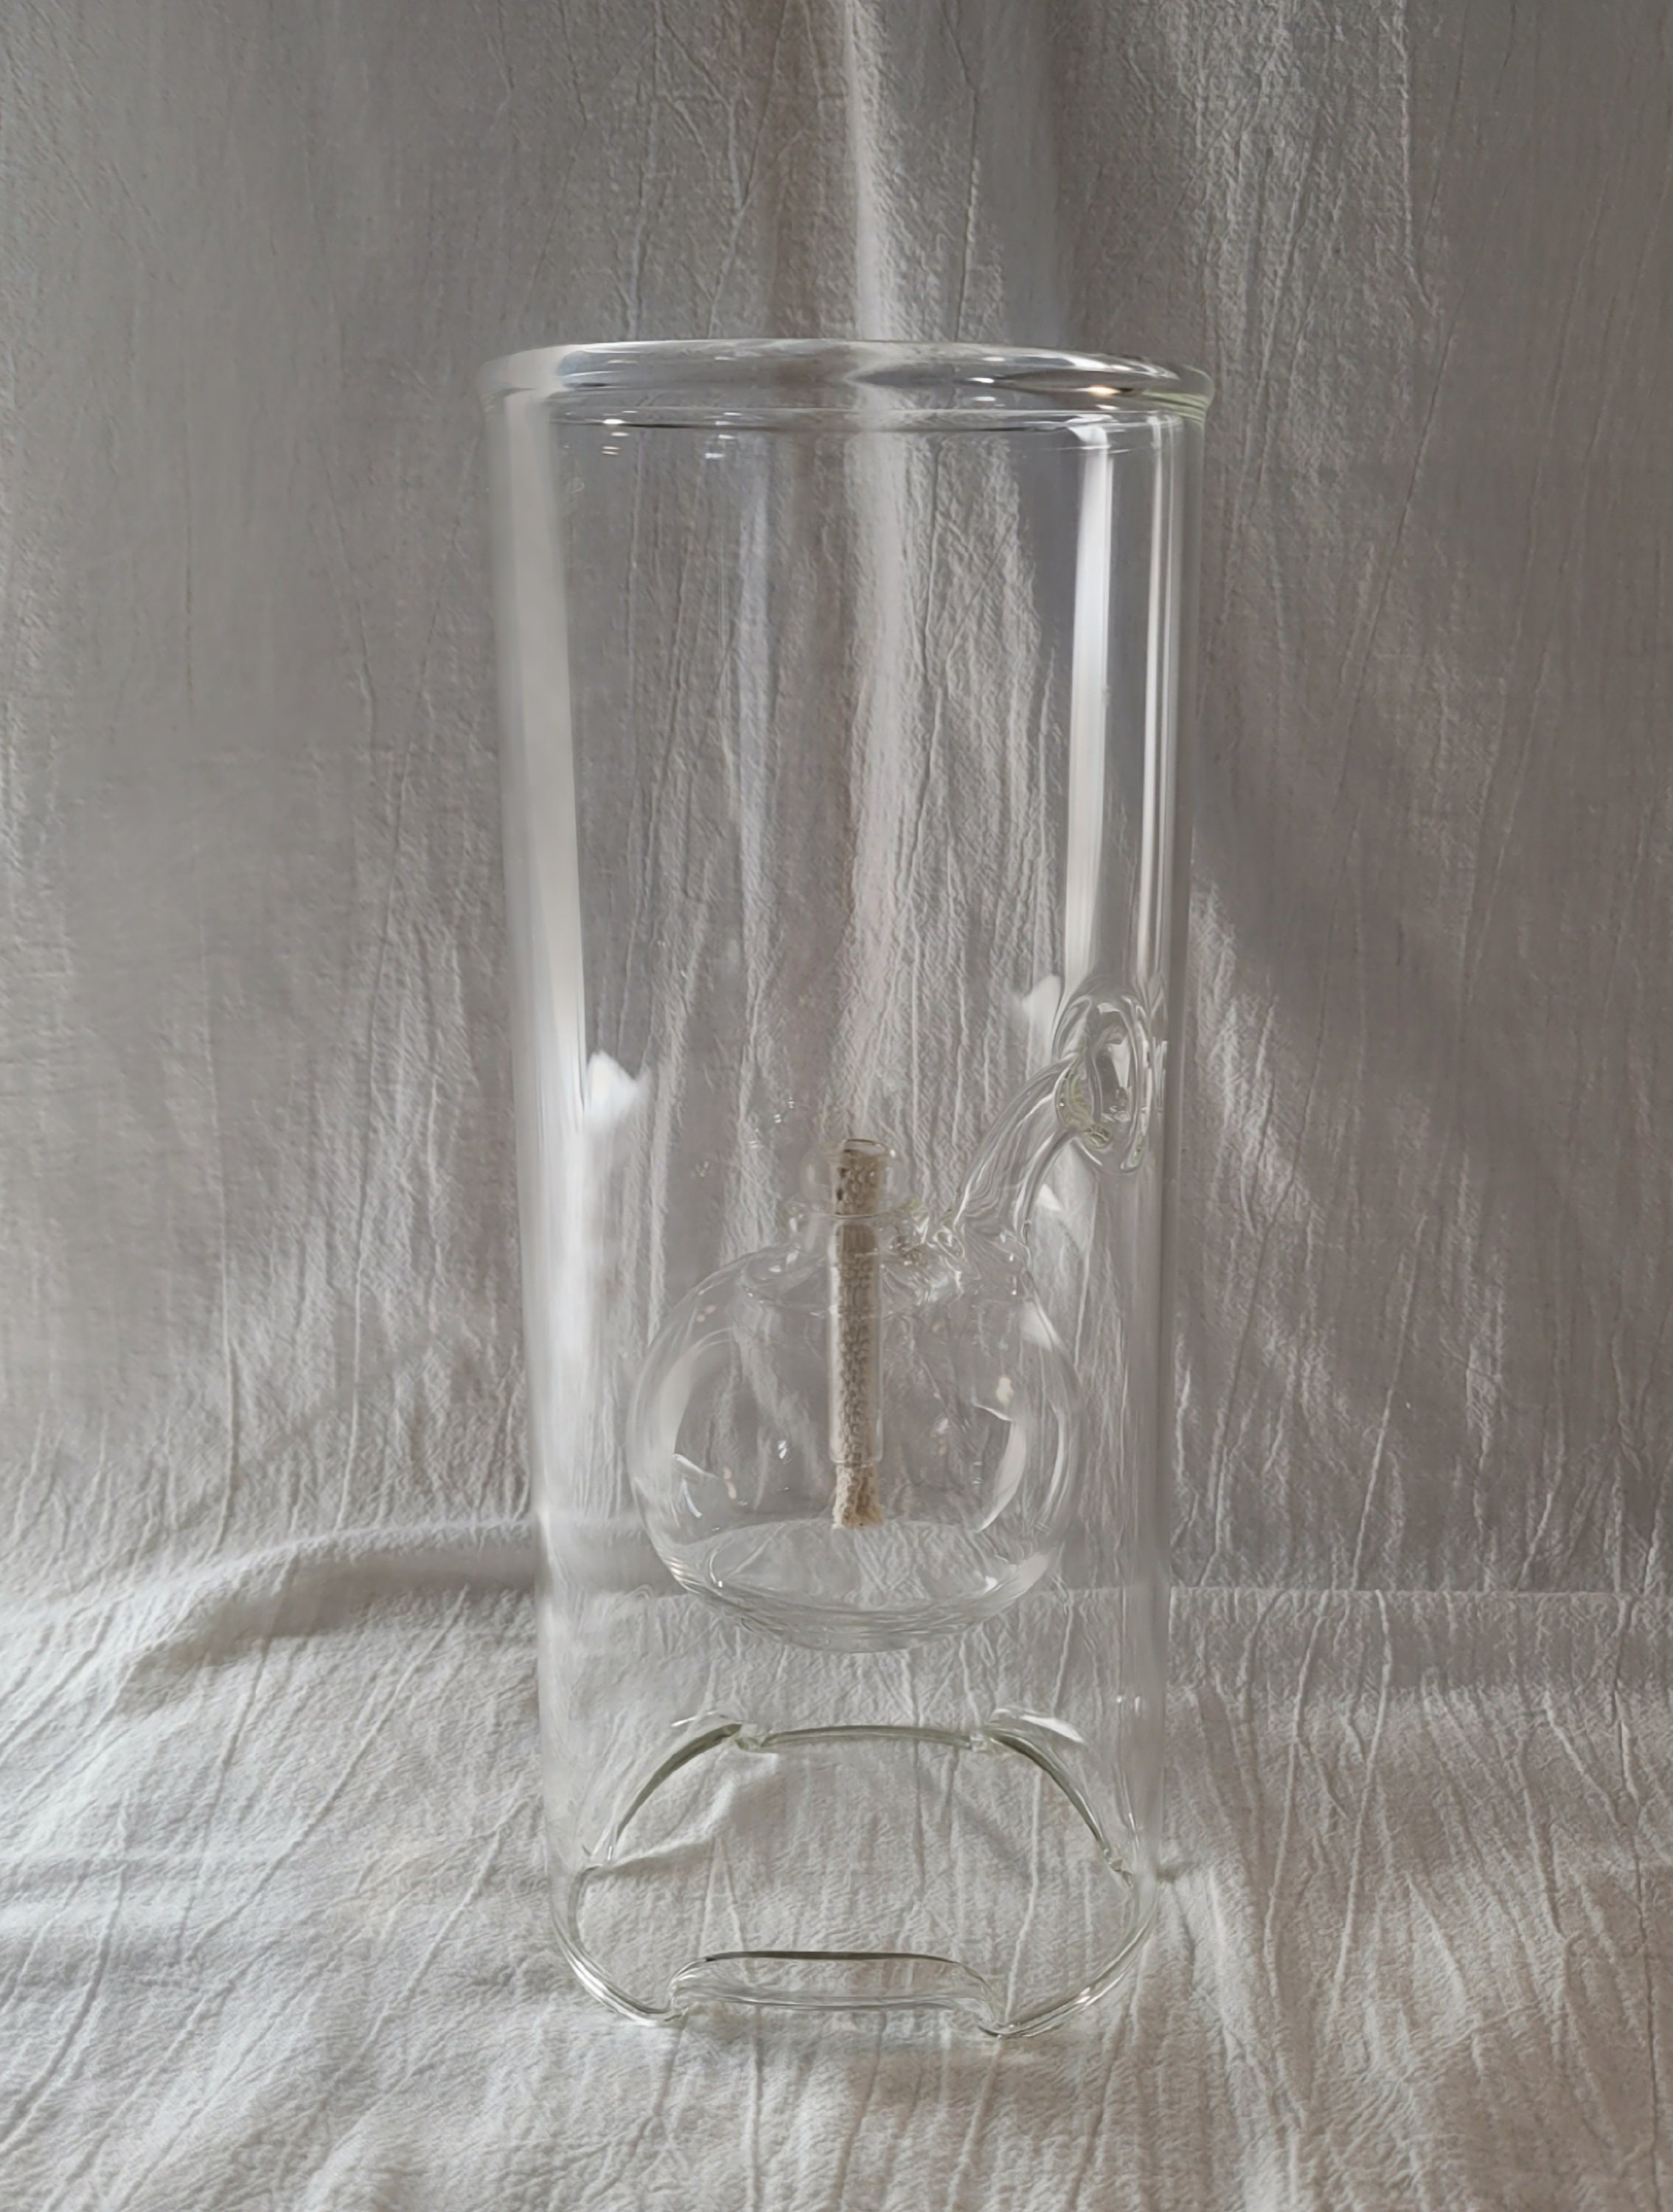 5pcs Glass Wick Holder Cotton Core for Kerosene Oil Lamp Alcohol